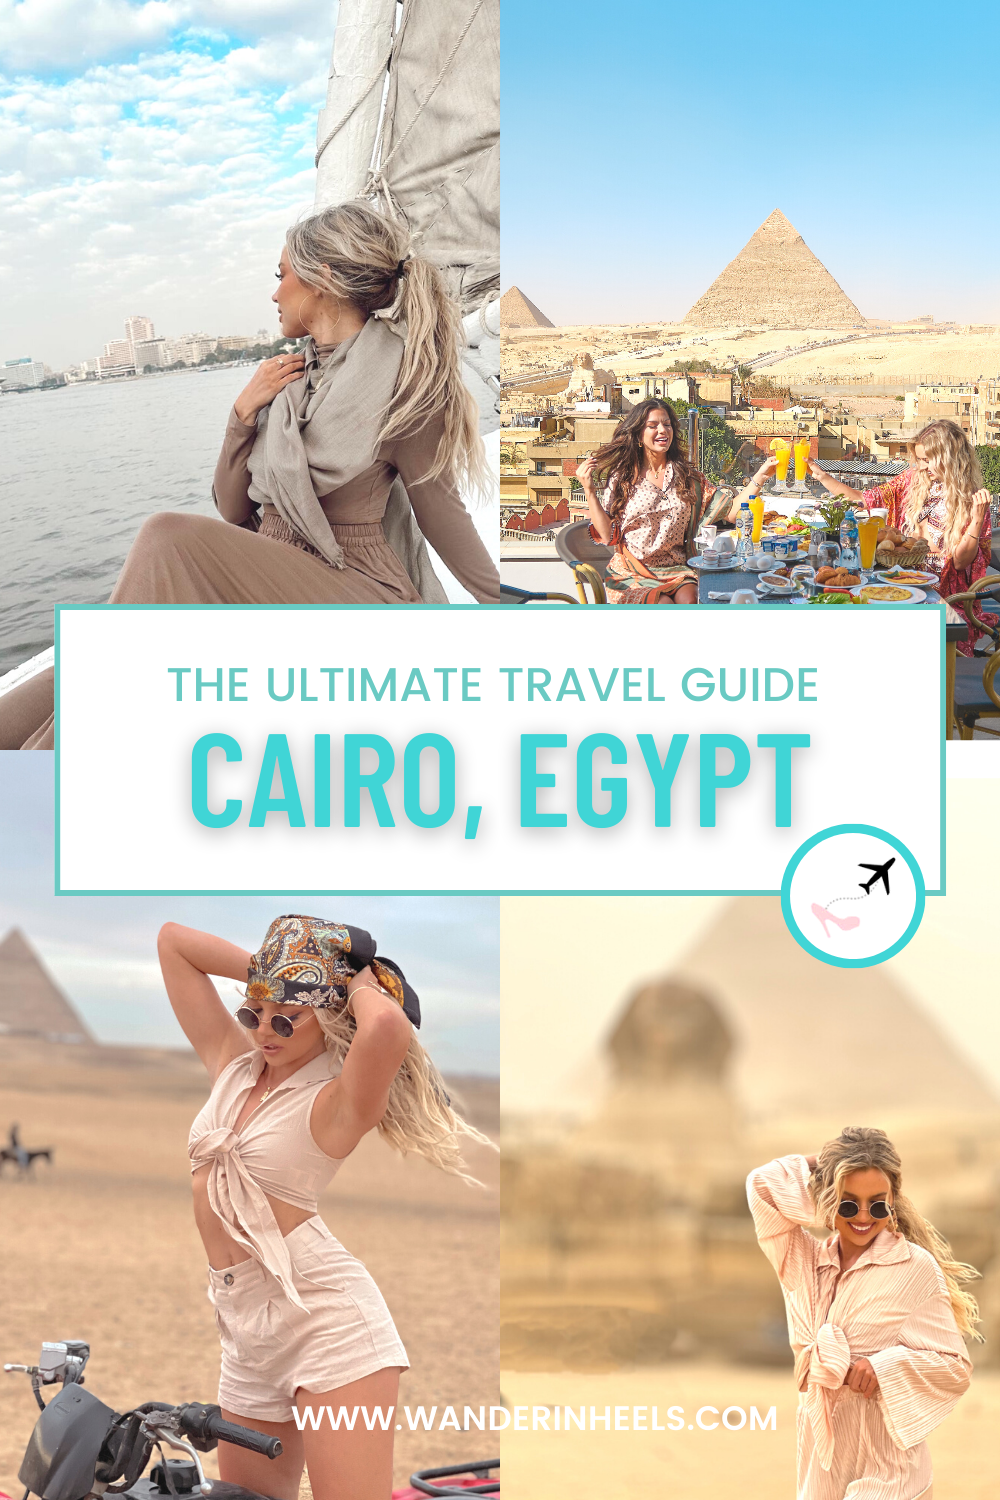 Egypt travel guide Alison Kay bowles